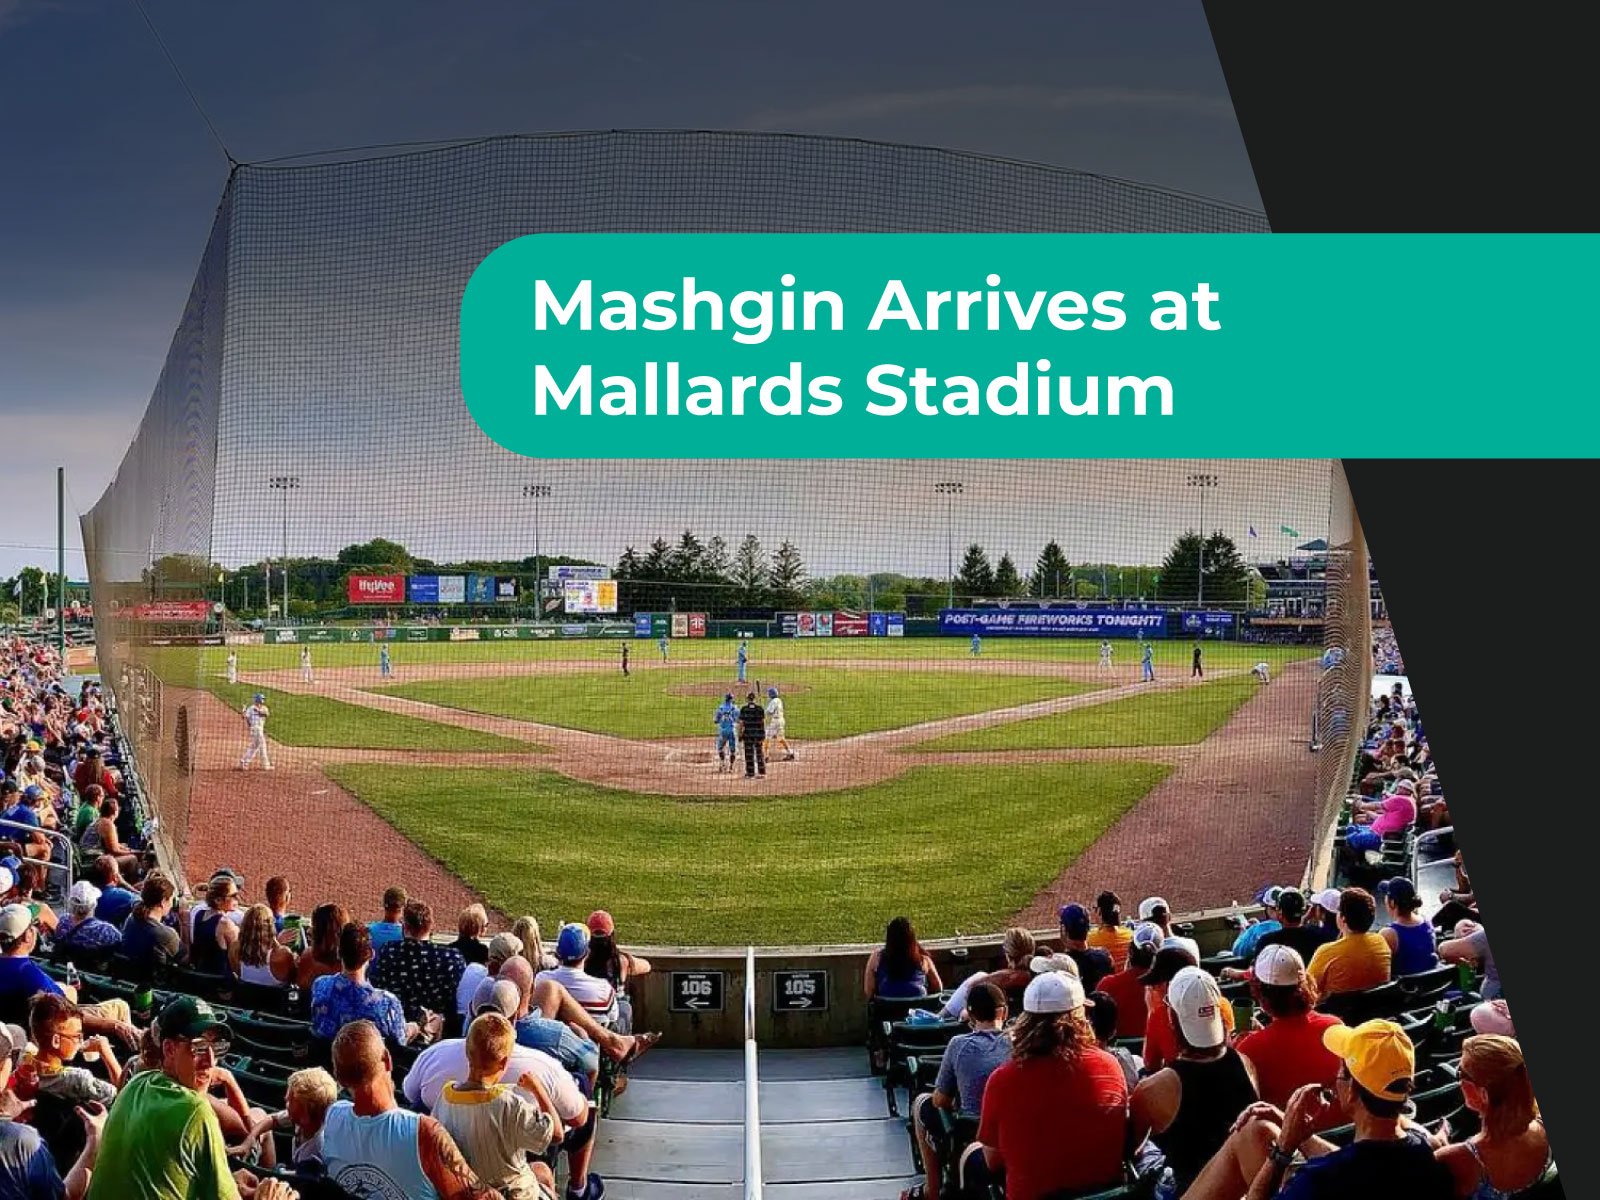 Mashgin arrives at Mallards Stadium